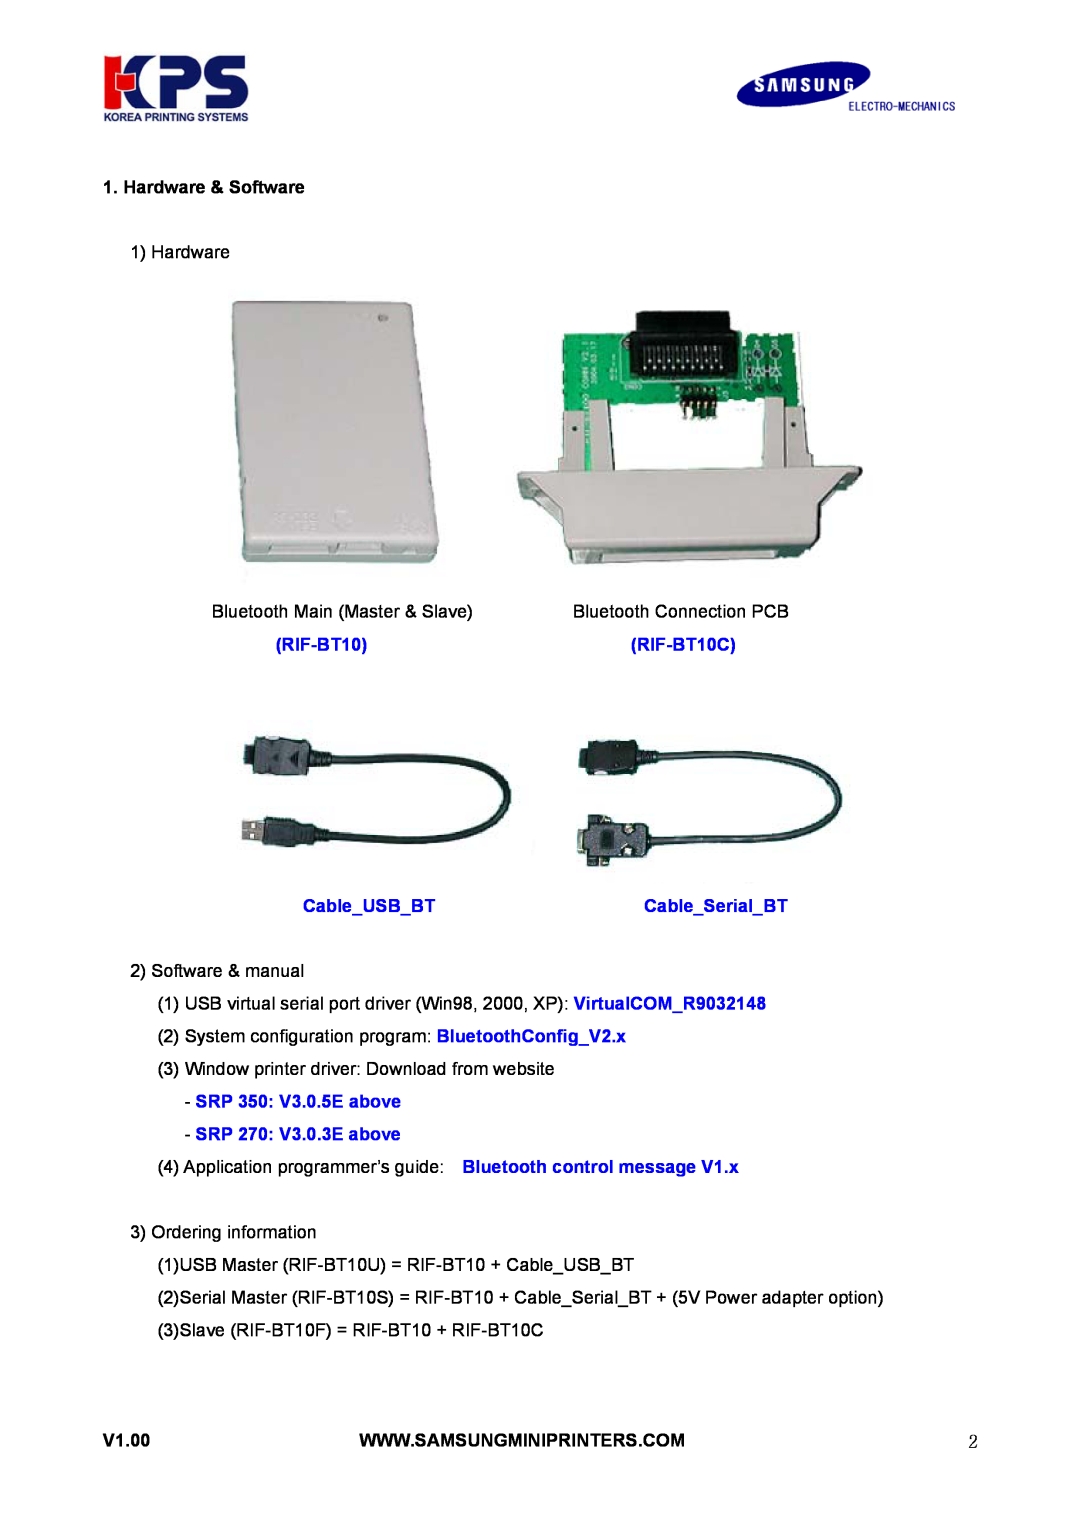 Samsung user manual RIF-BT10C, CableUSBBTCableSerialBT, SRP 350 V3.0.5E above SRP 270 V3.0.3E above 